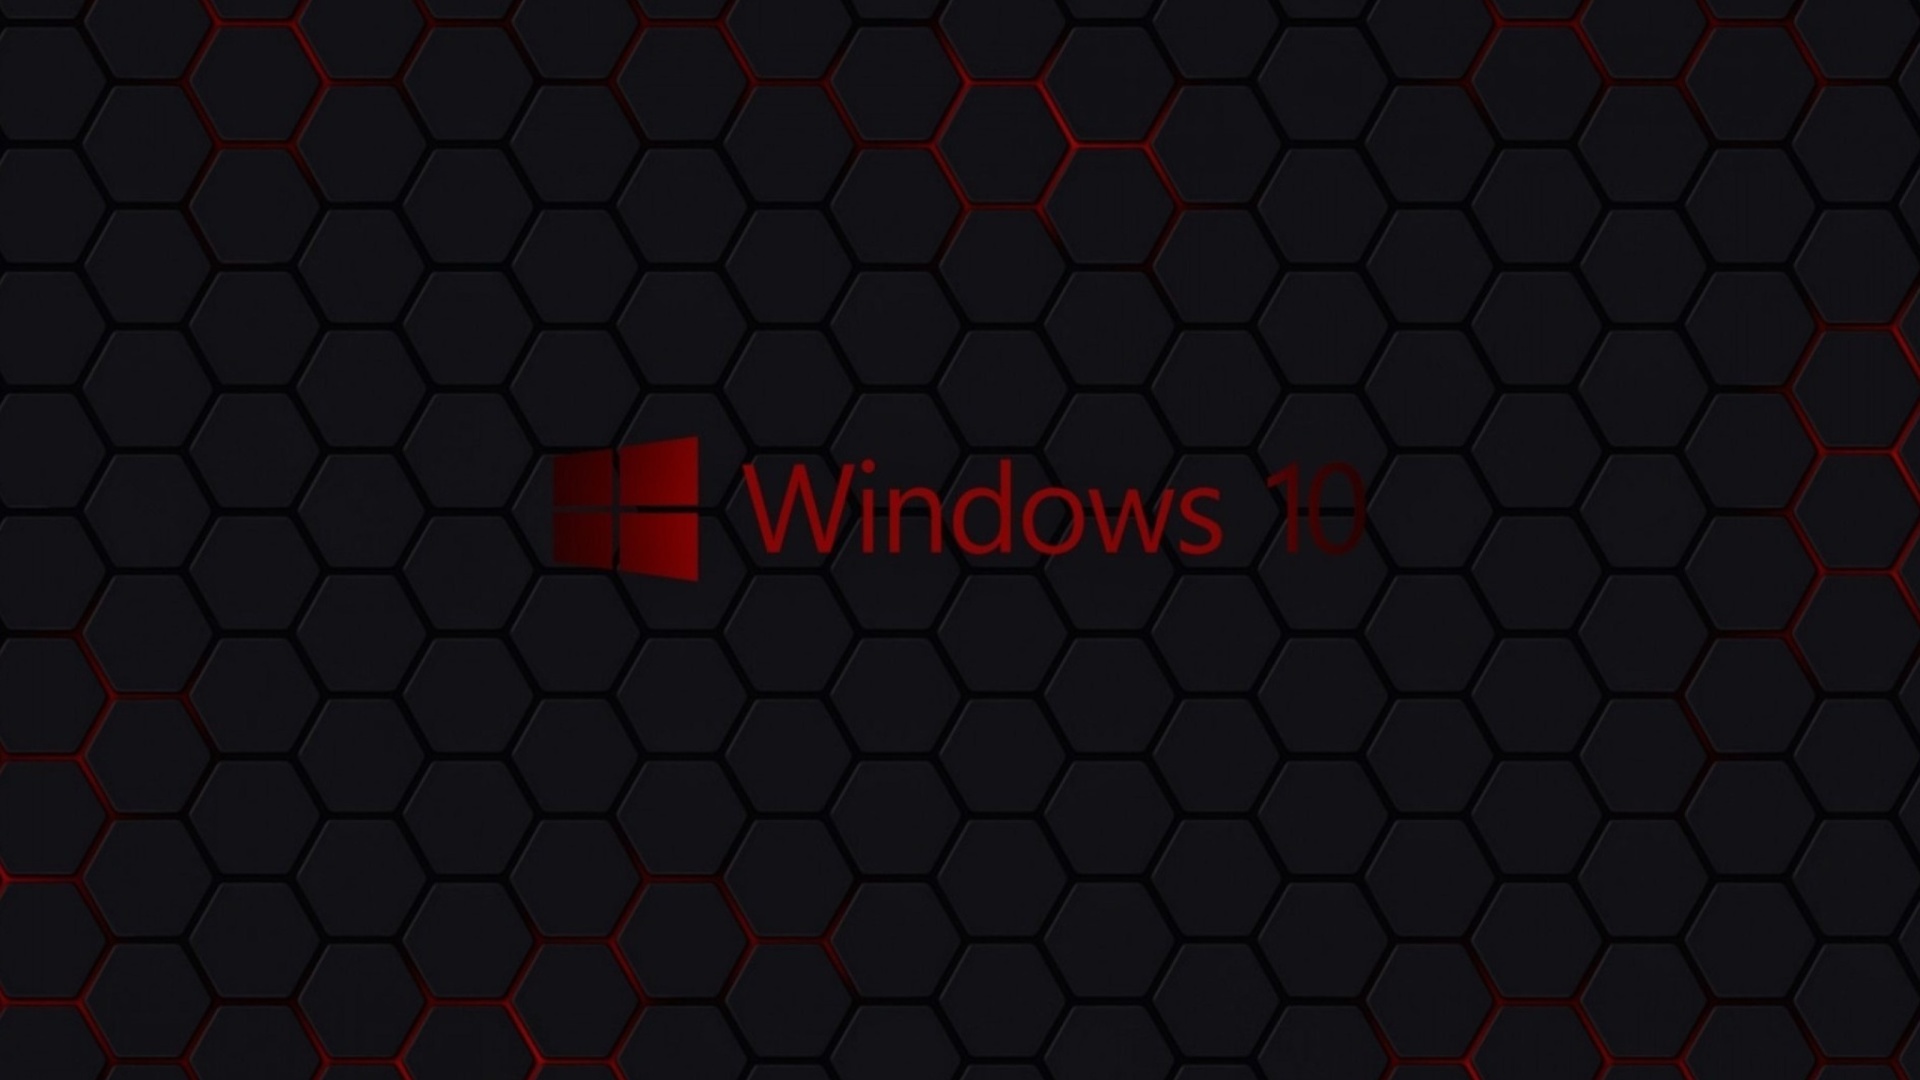 Windows 10 Dark Wallpaper Wallpaper For Desktop 1920X1080 Full Hd